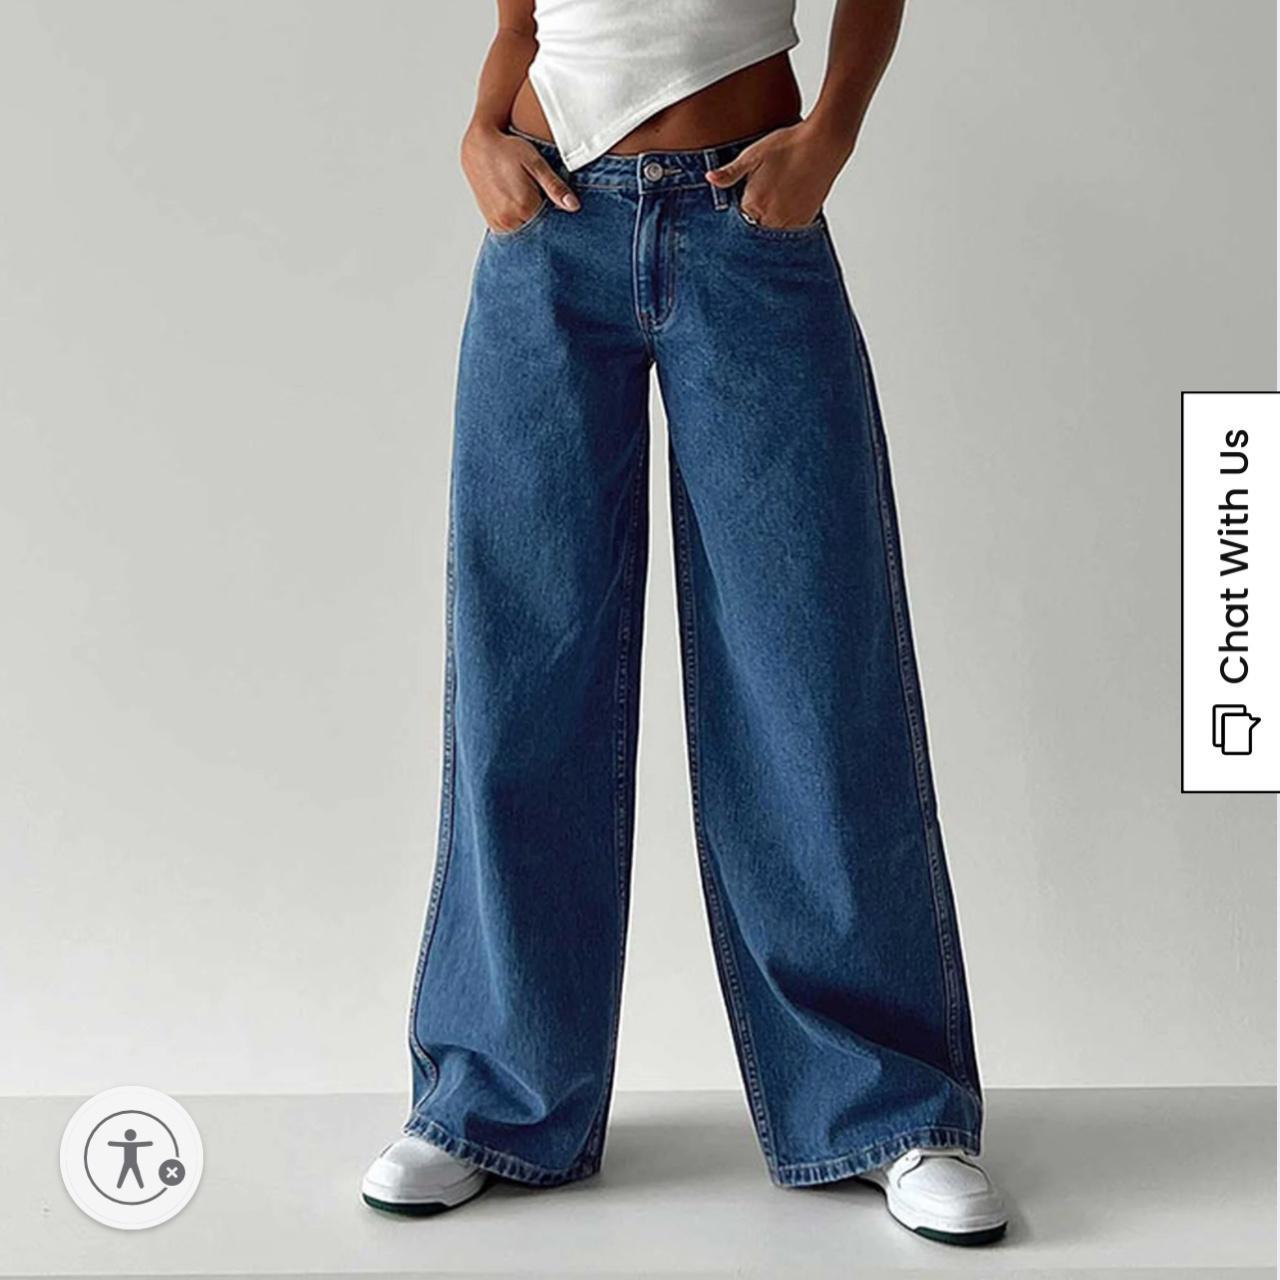 true y2k low rise jeans with baggy legs, very bratz - Depop